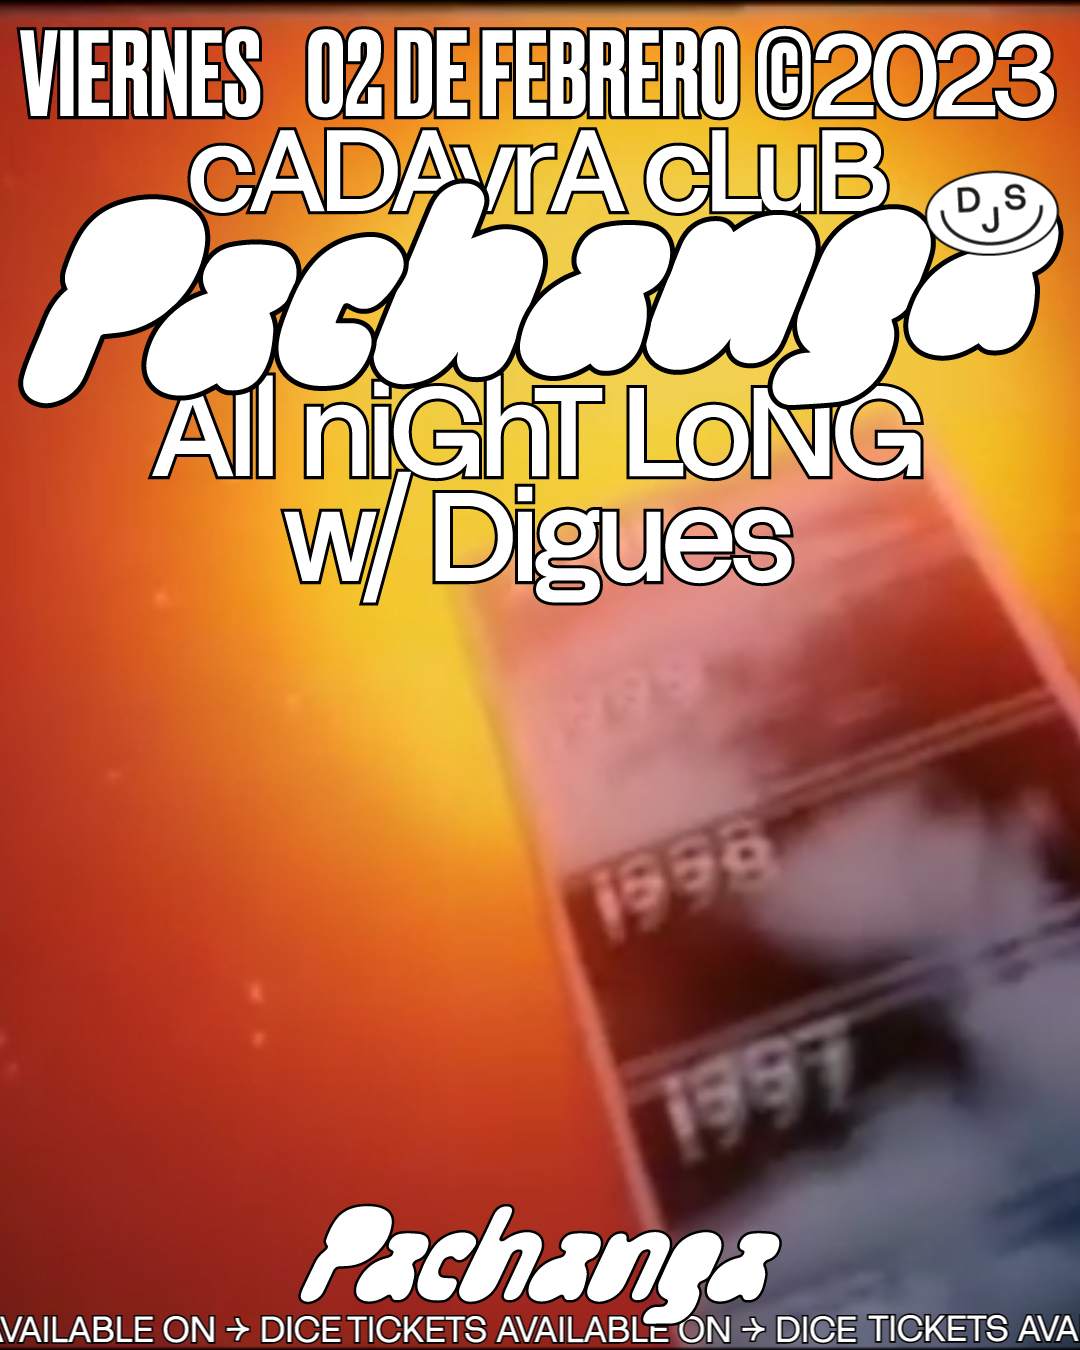 Pachanga invites Digues - フライヤー表